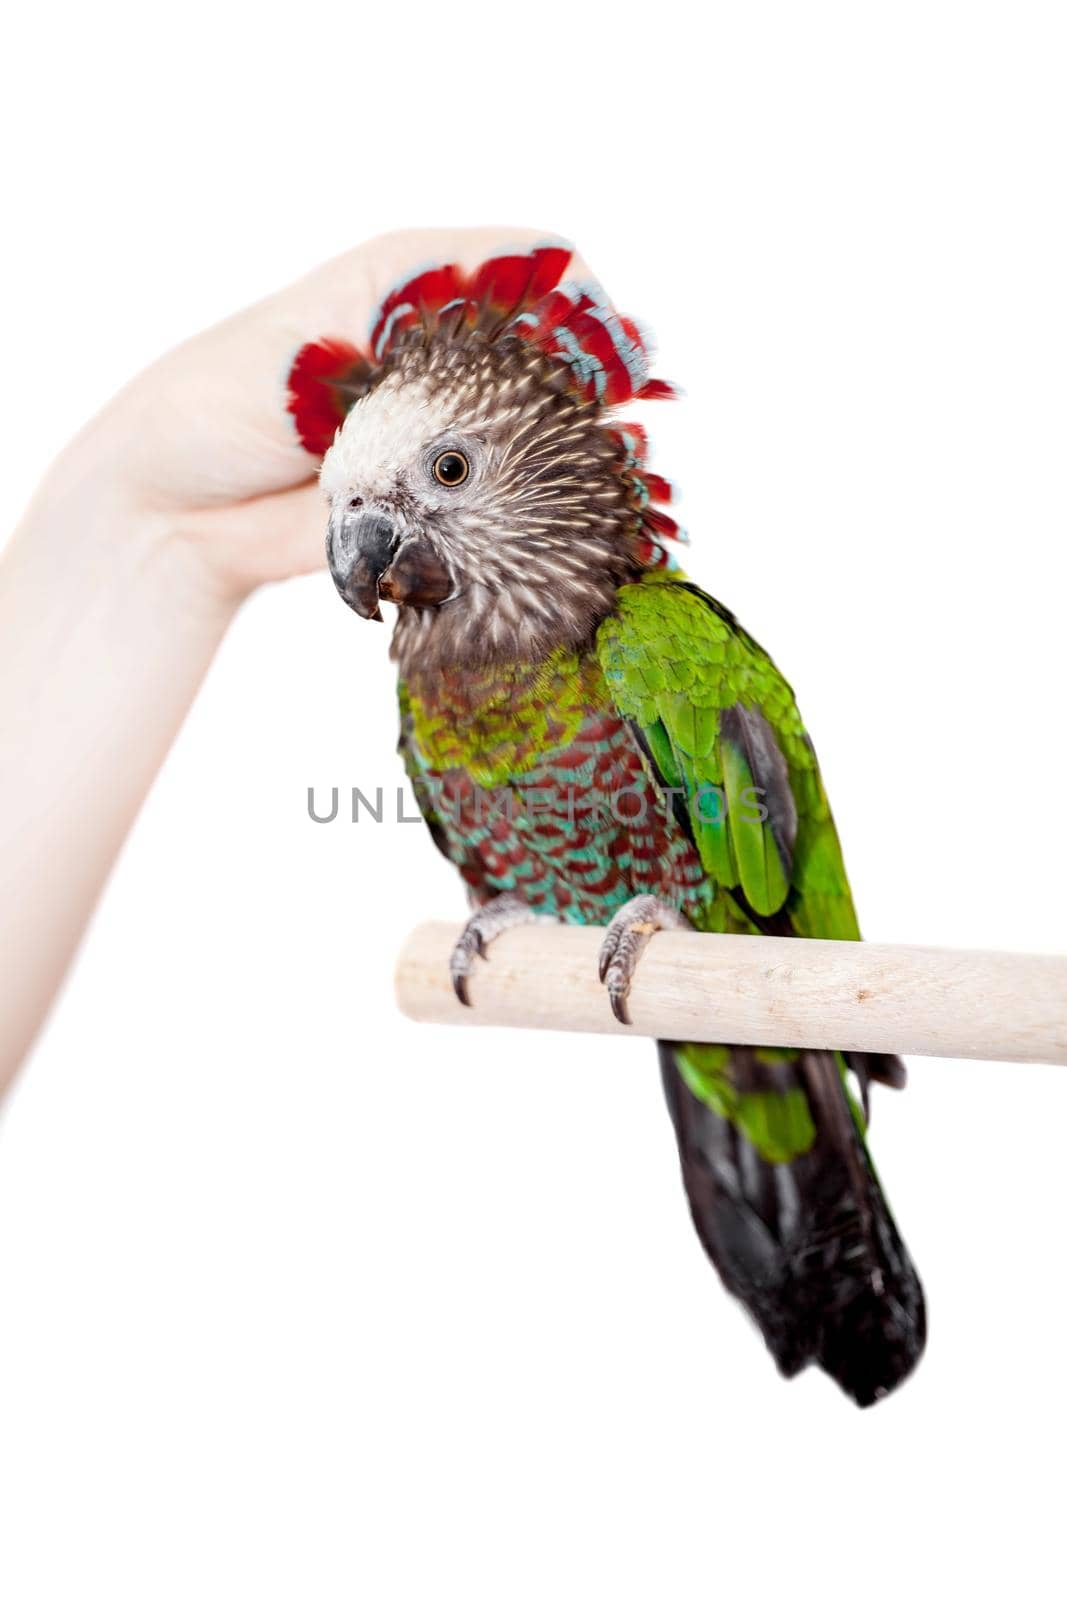 Hawk-headed Parrot, Deroptyus accipitrinus by RosaJay